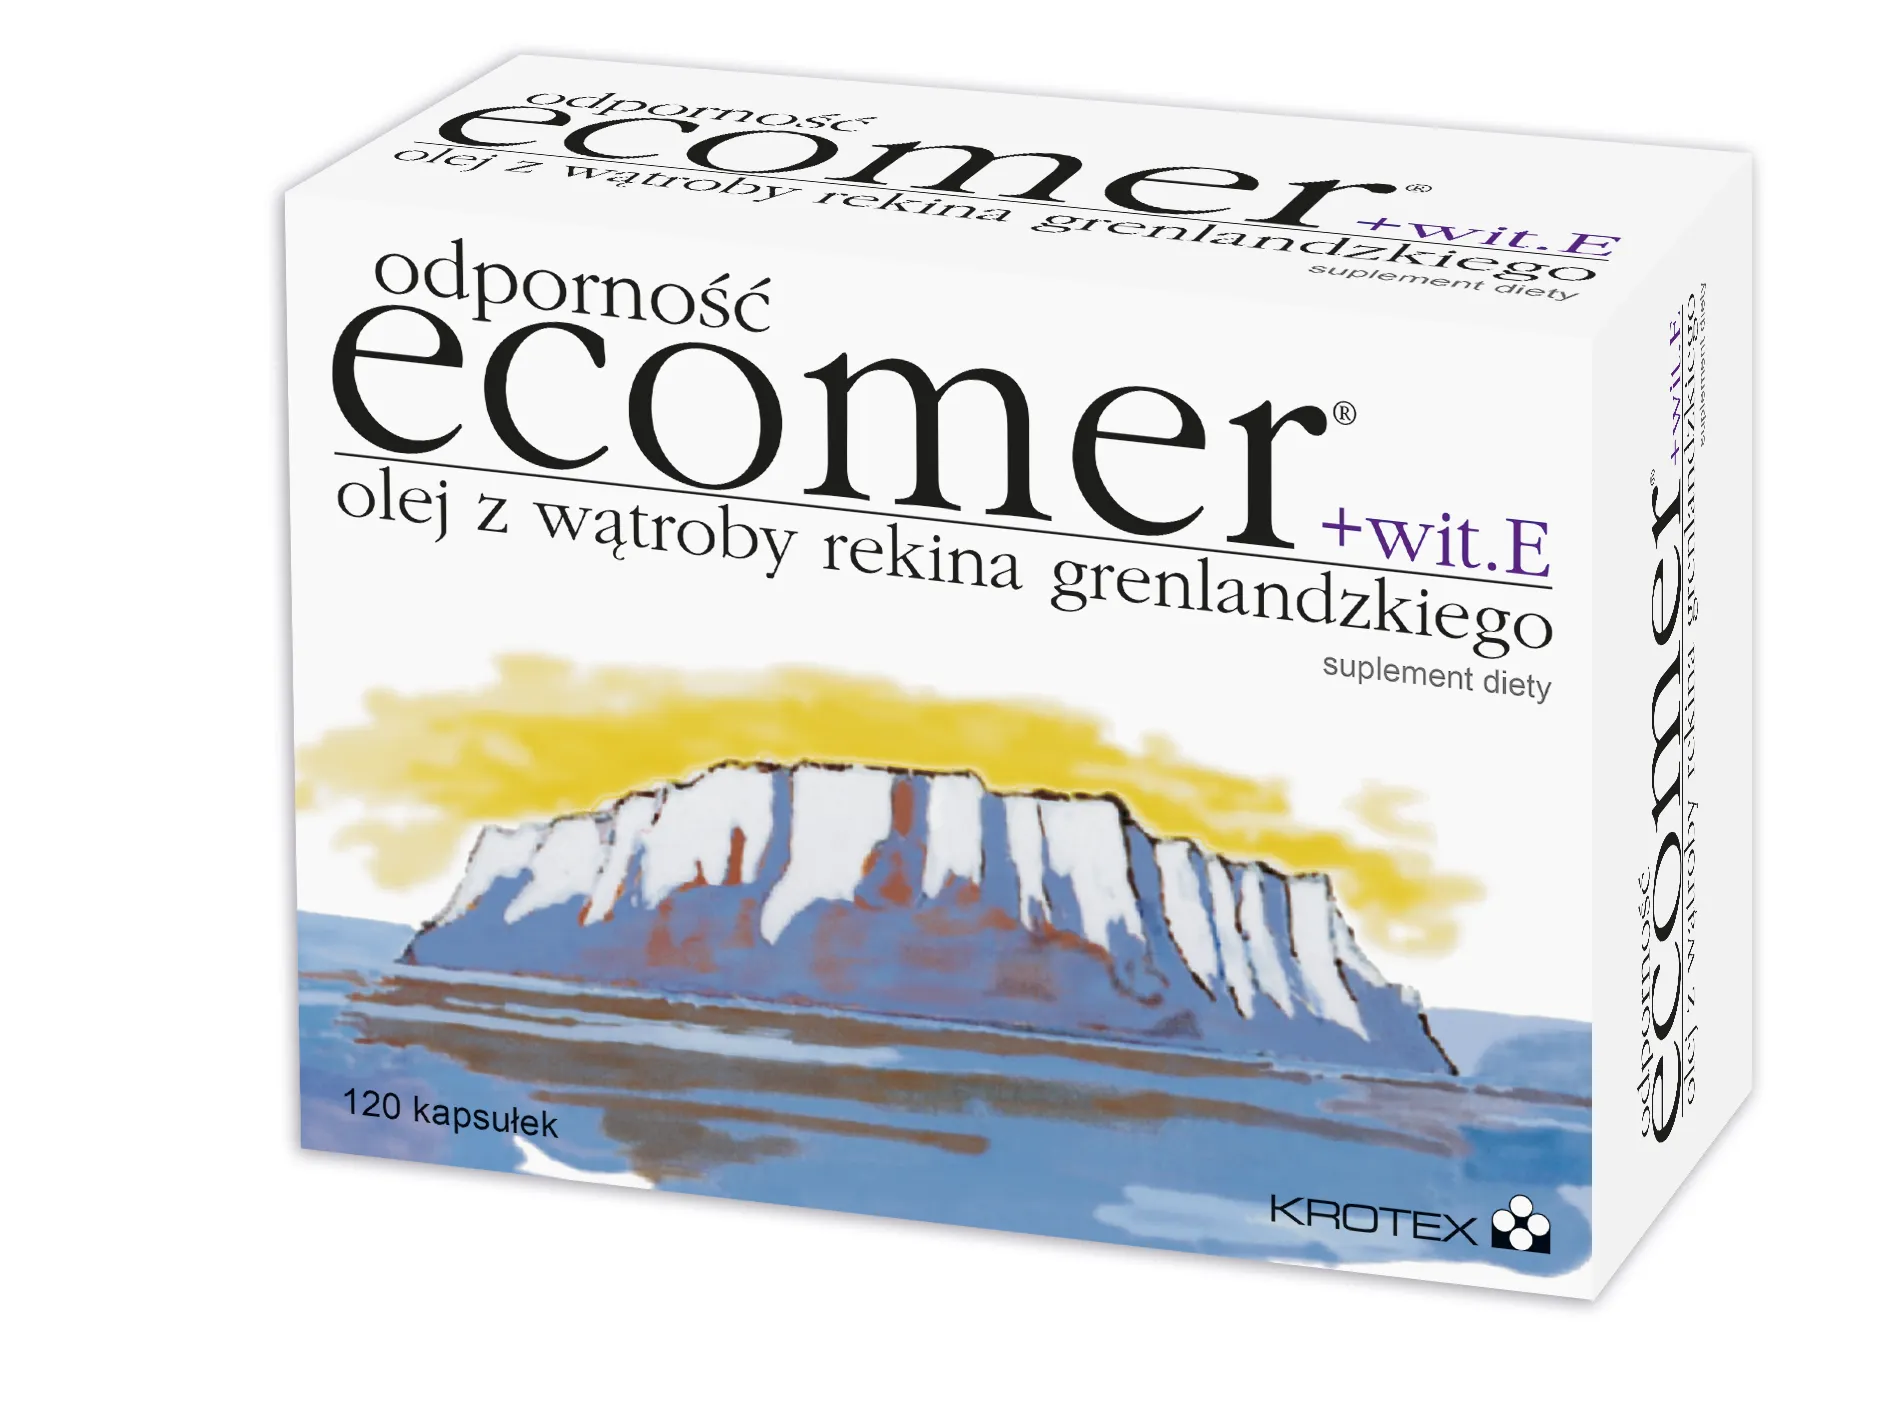 Odporność Ecomer + wit. E, suplement diety, 120 kapsułek